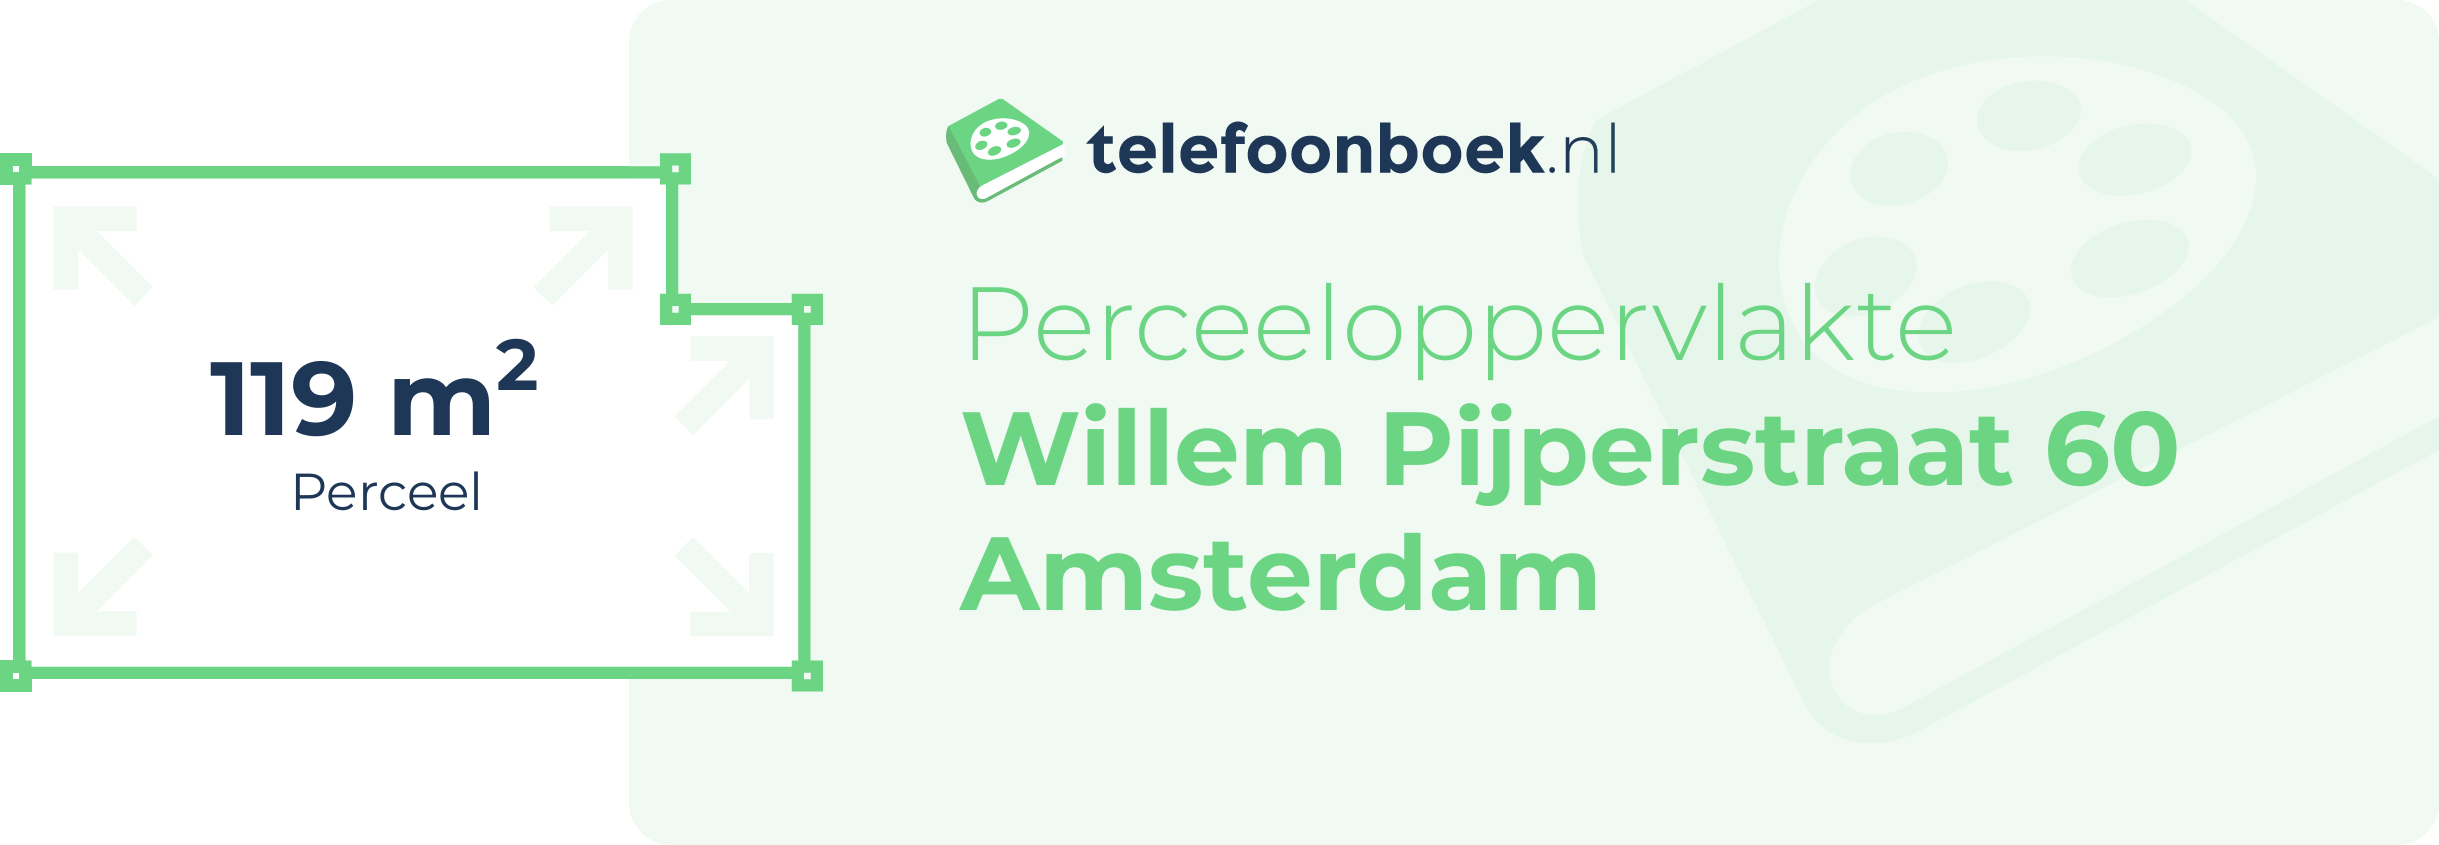 Perceeloppervlakte Willem Pijperstraat 60 Amsterdam